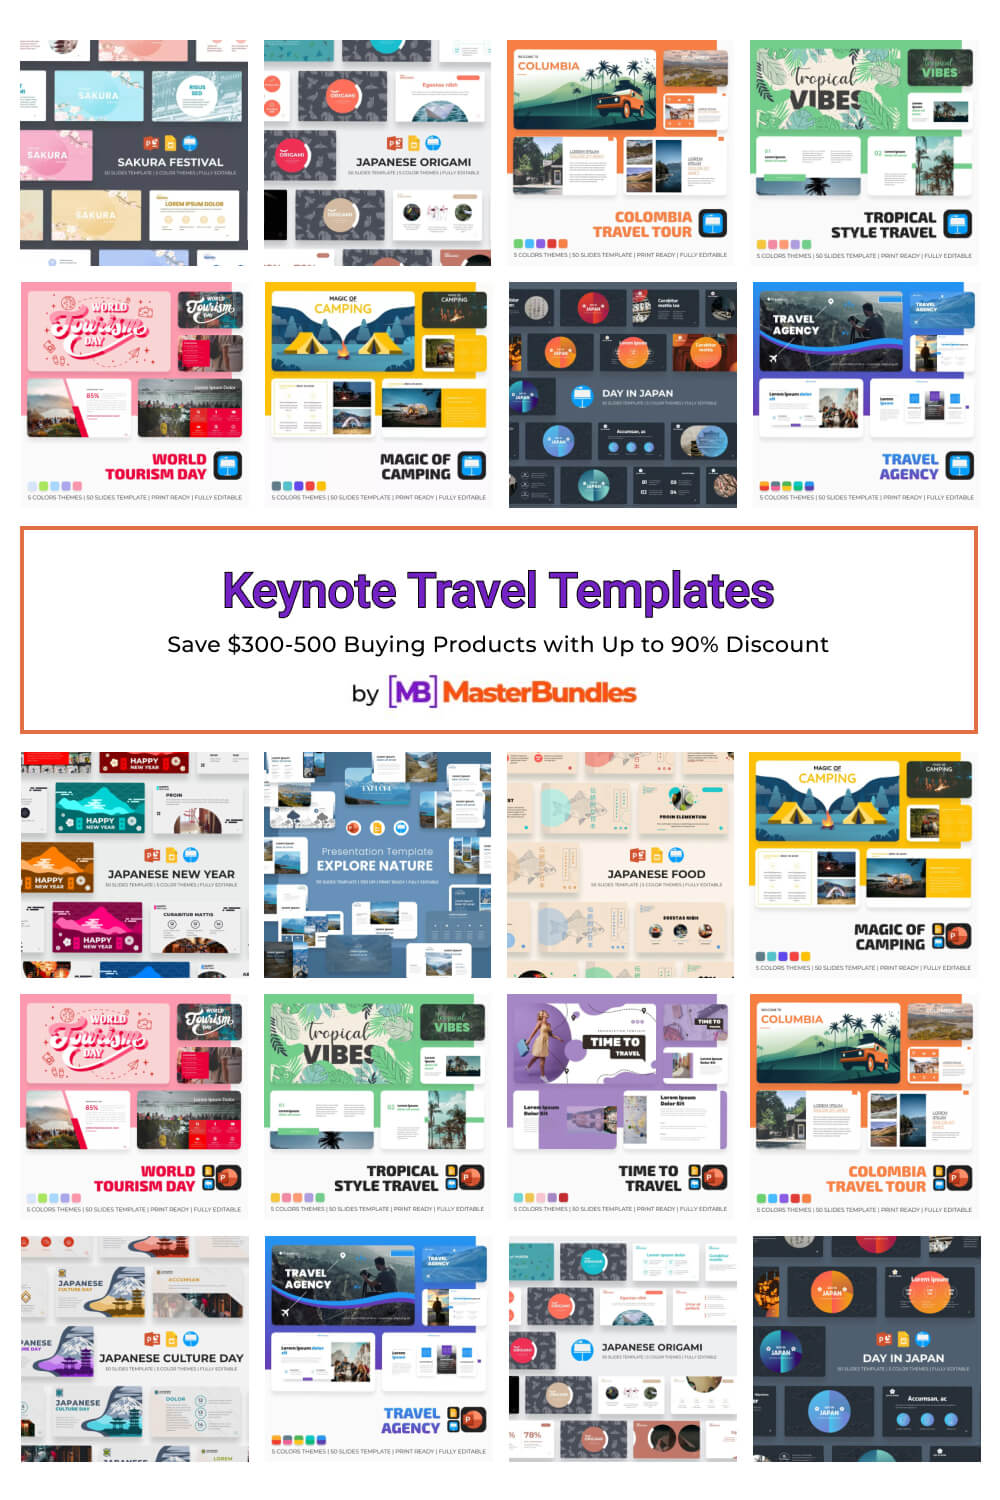 keynote travel templates pinterest image.